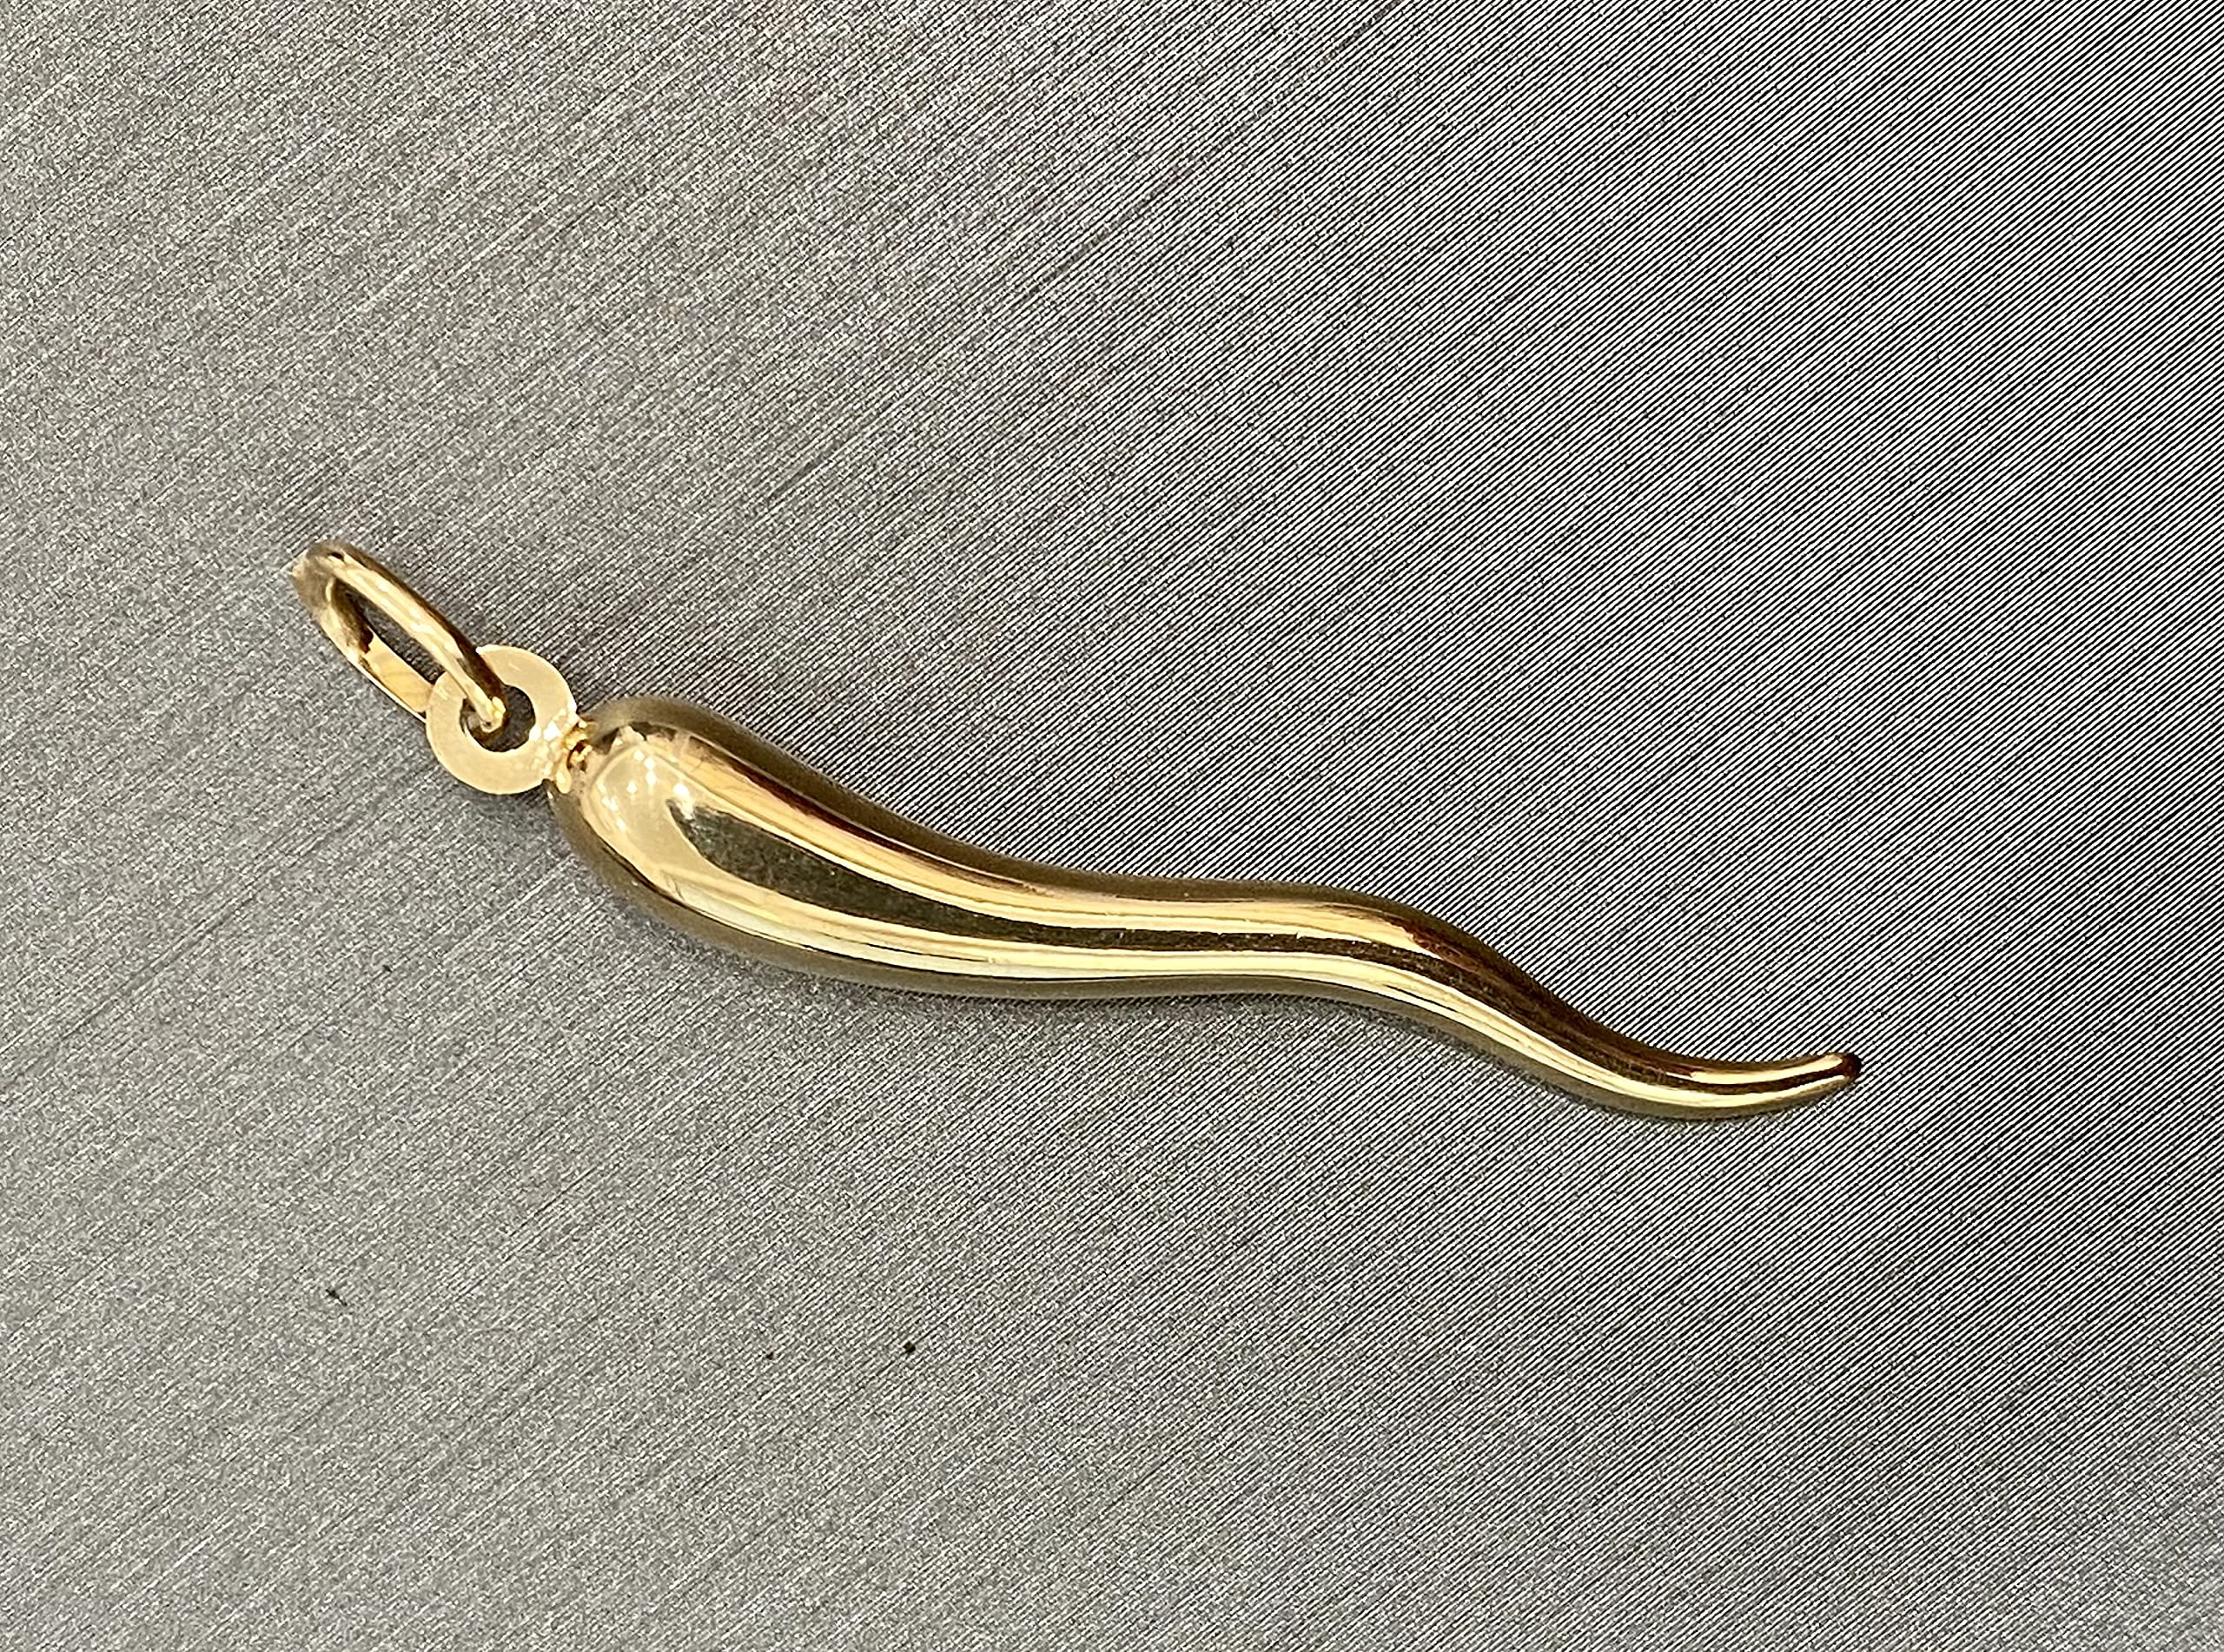 TGDJ 14k Yellow Gold Cornicello Italian Horn Charm Pendant - 4 Differnet Size Available